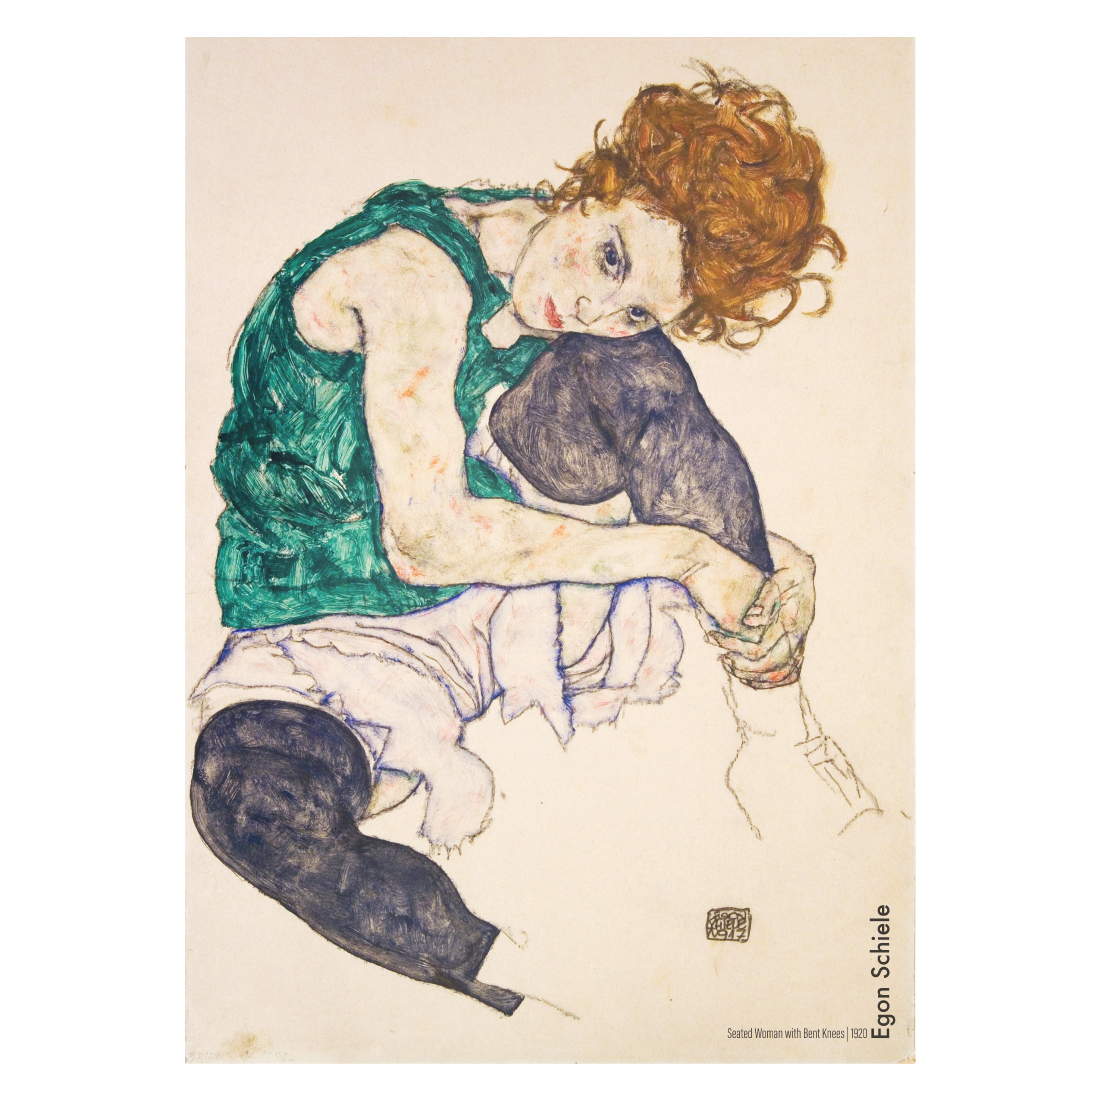 Kunstplakat med Egon Schieles skitse "Seated woman with bent knees"